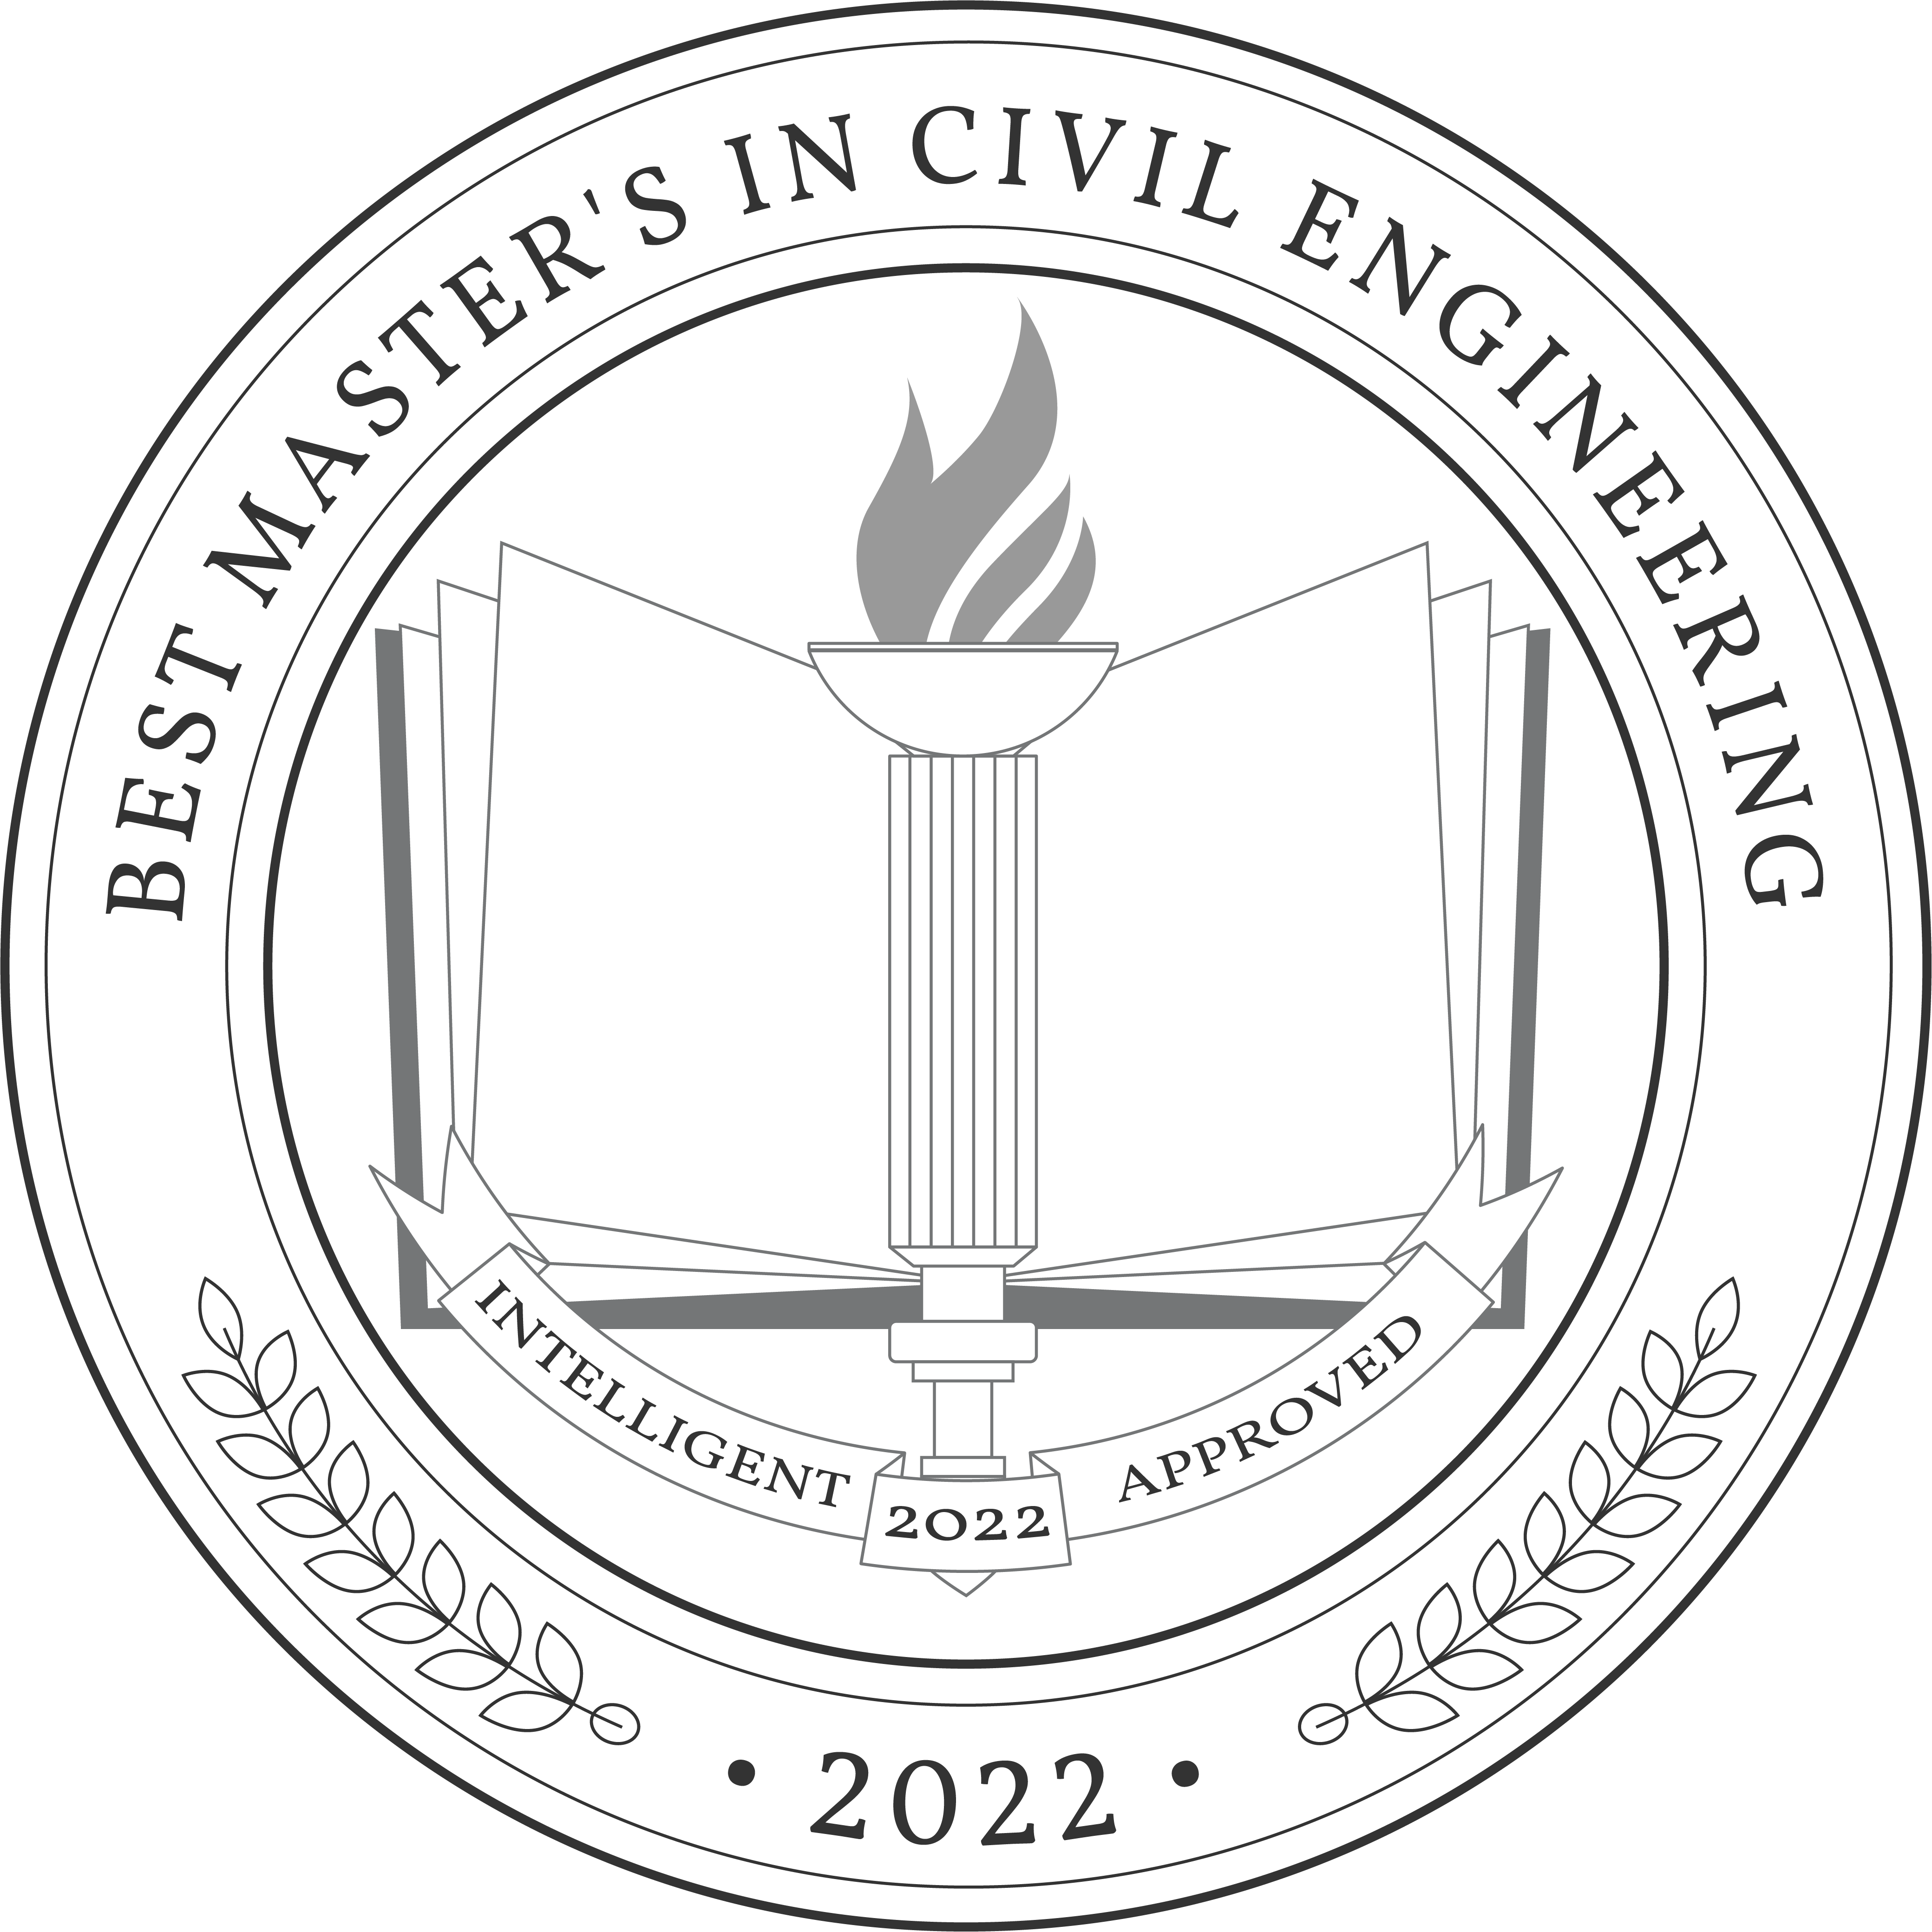 Best Master's in Civil Engineering Degree Programs